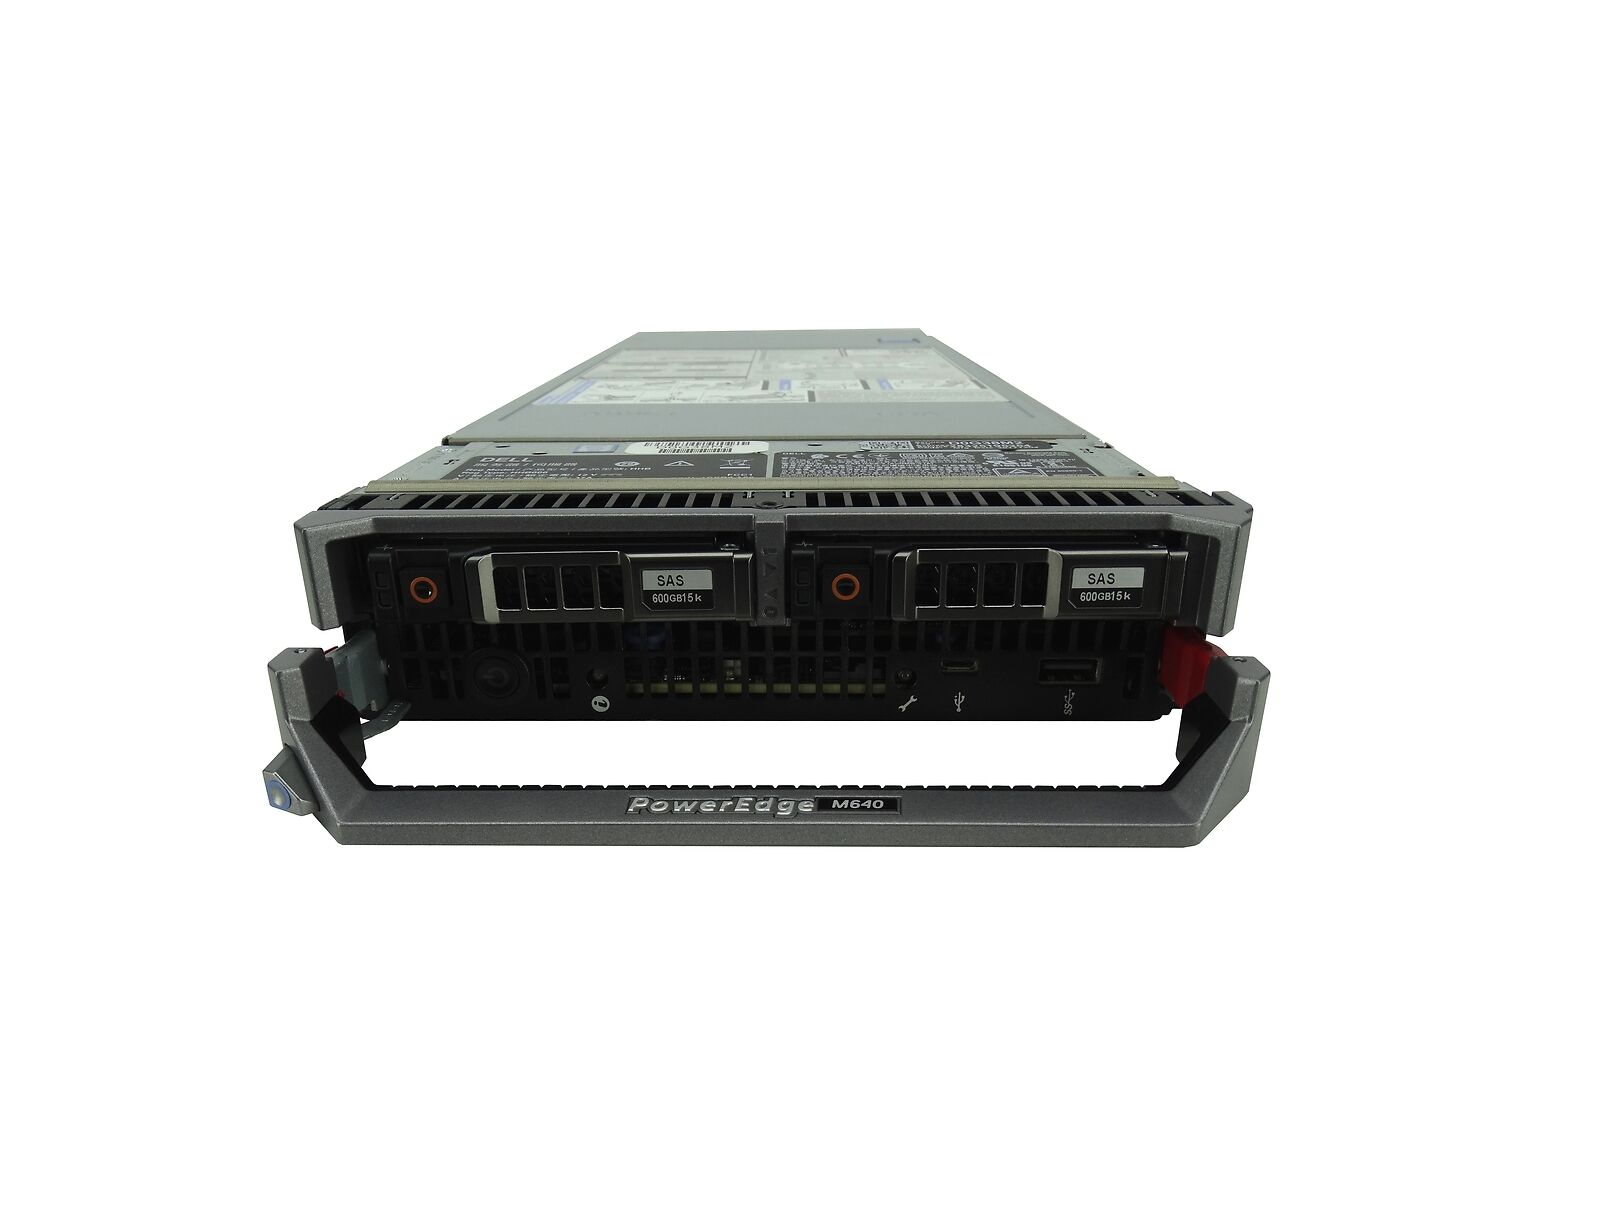 Dell PowerEdge M640 Blade Server CTO w/ H330 raid, 2x H.S, IDRAC ENT, X520-k 10G